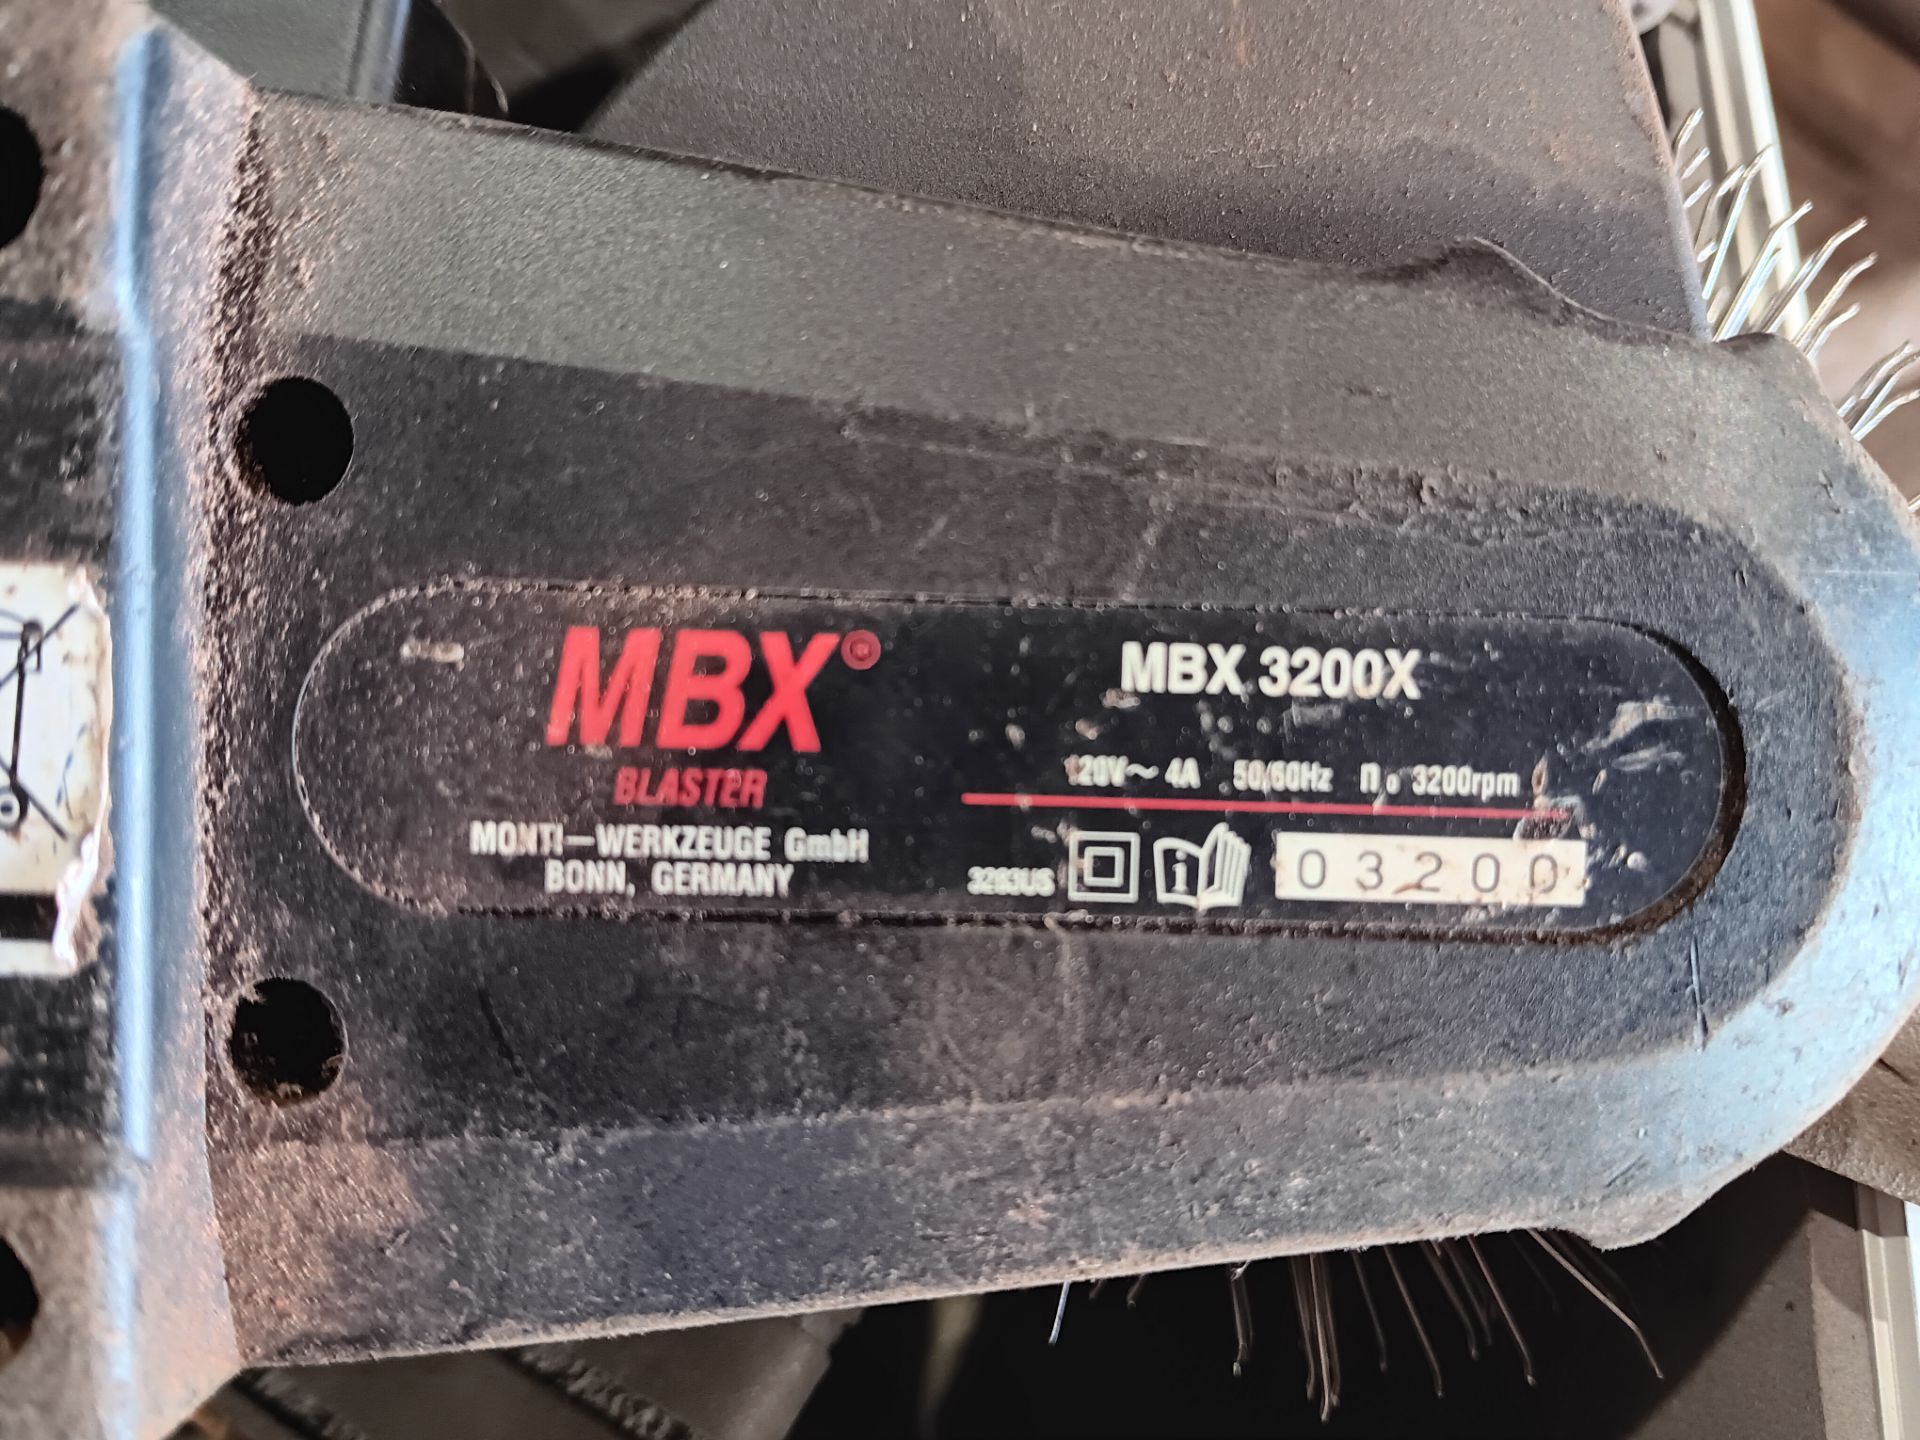 MBX 3200X blaster weld cleaner 110v - Bild 3 aus 5